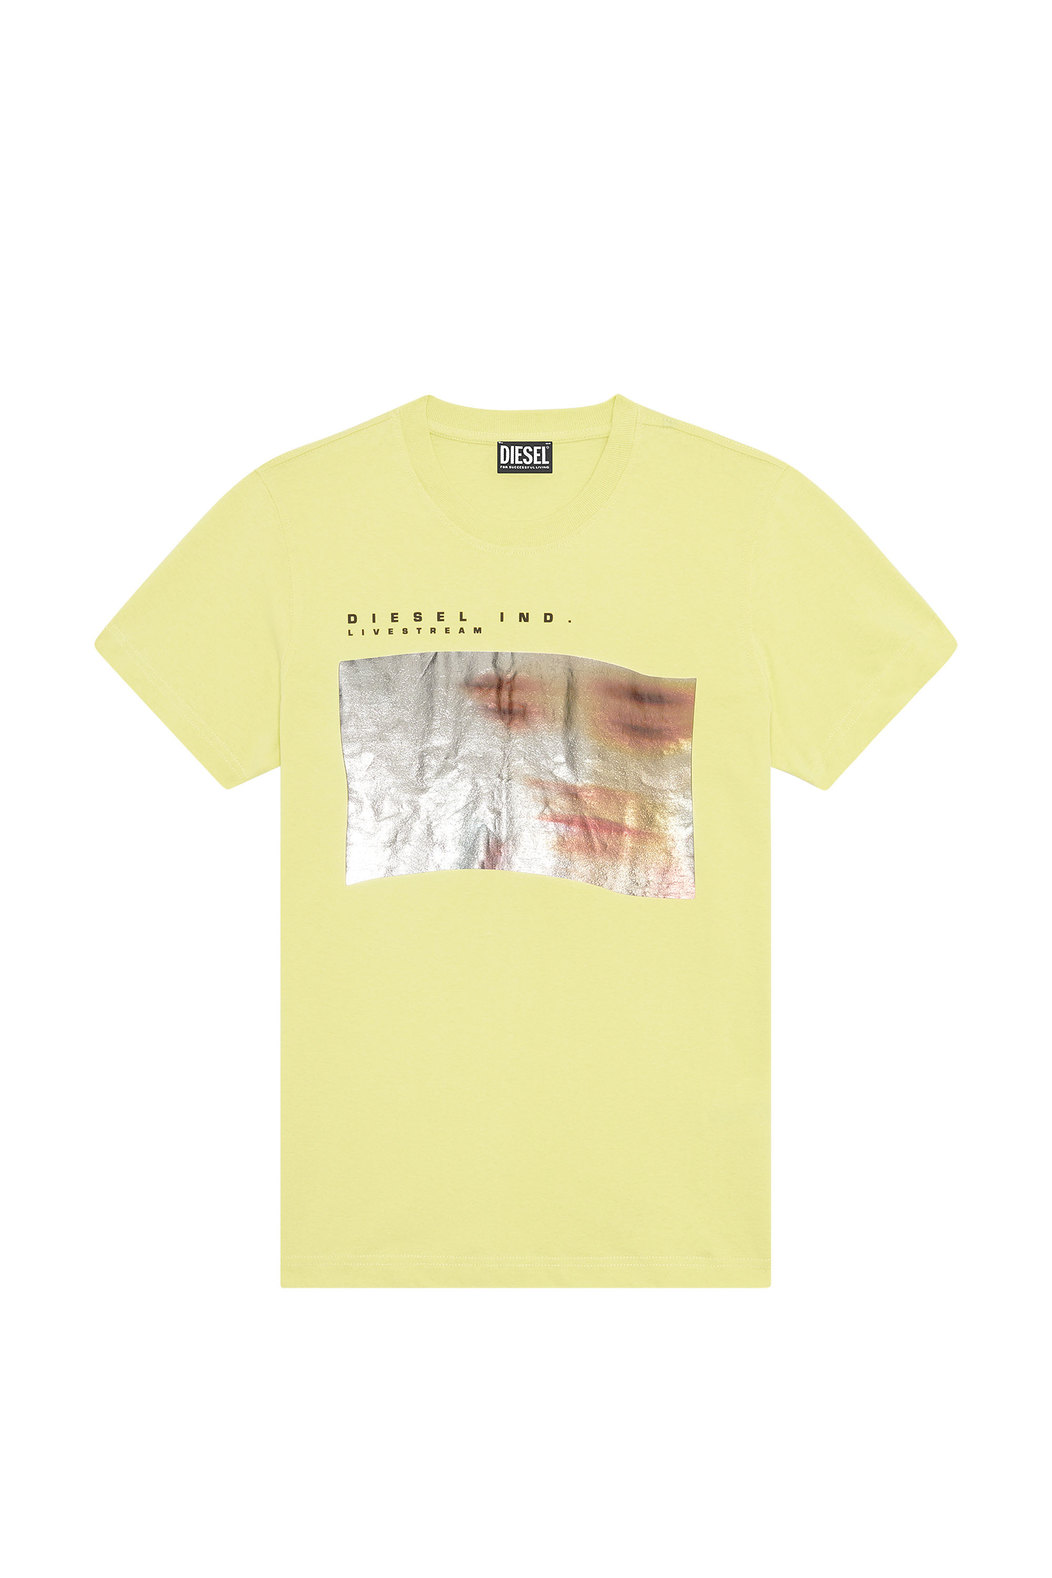 T-shirt with metallic blurry-face print